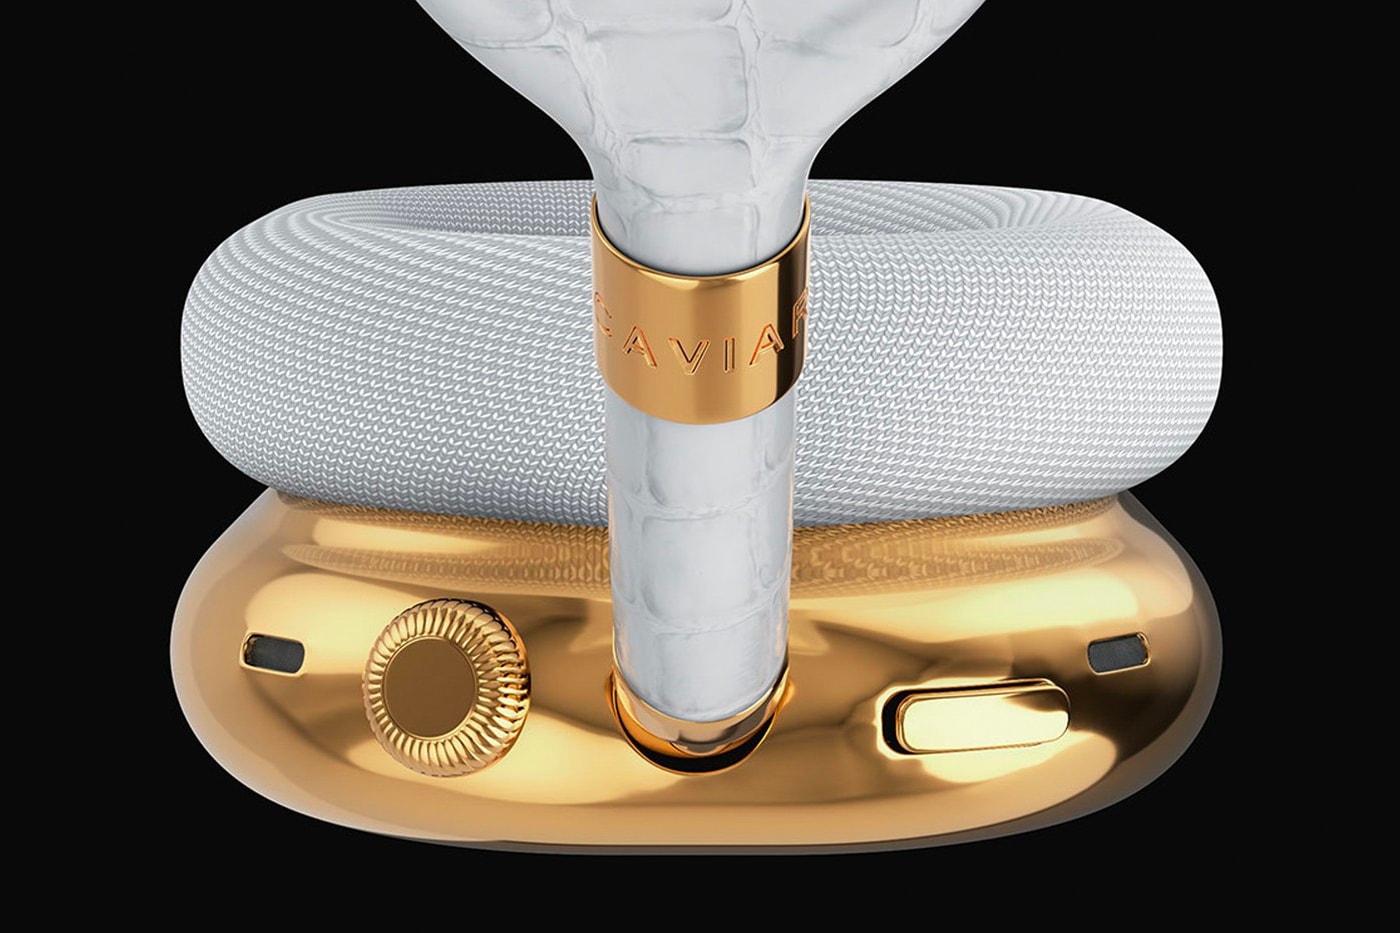 Caviar 108 000 USD Pure Gold Apple AirPods Max Release Info Buy black white